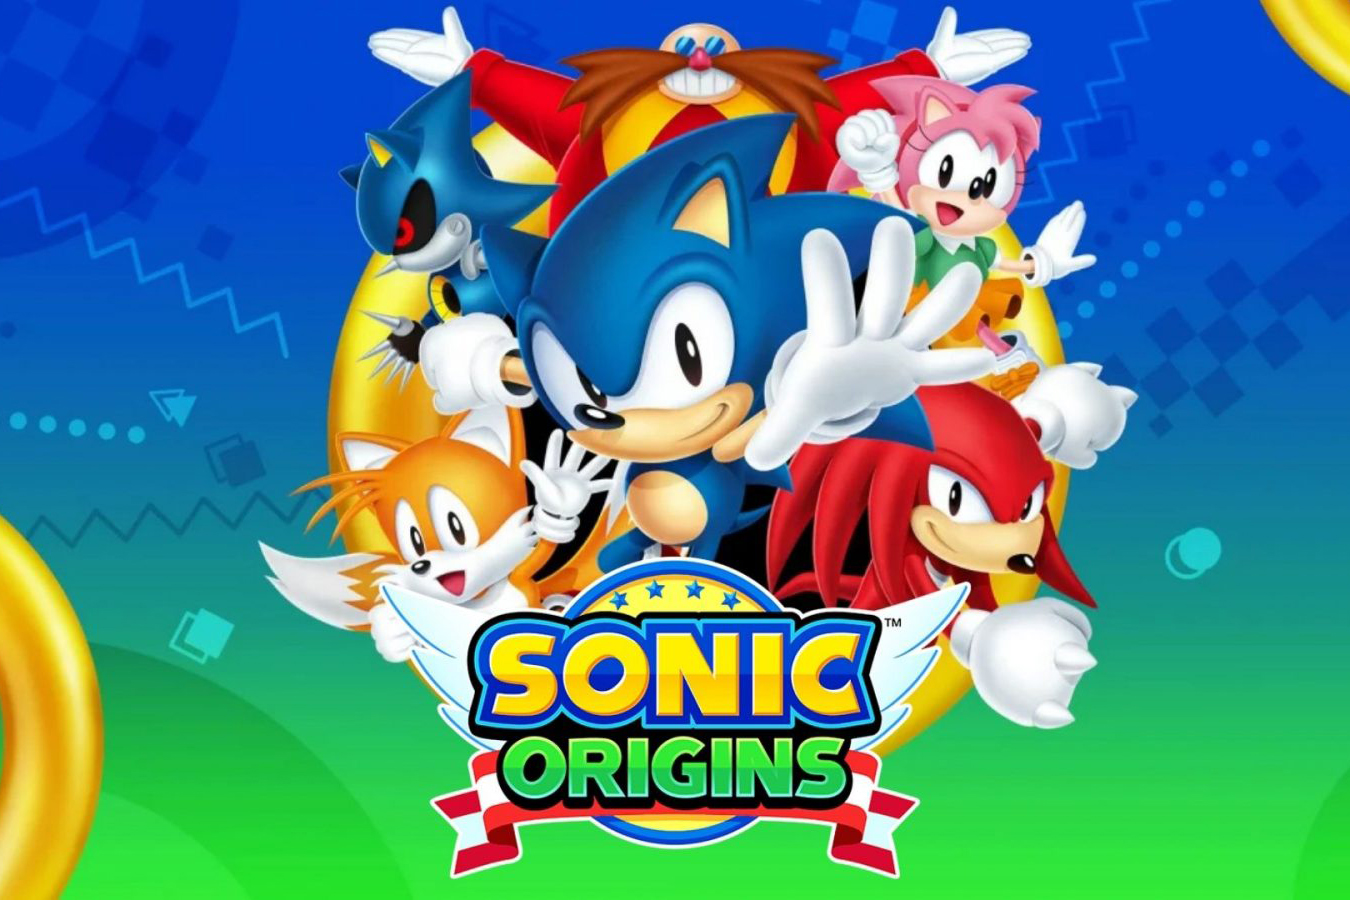 Sonic Origins - Sonic the Hedgehog CD: Long play - Amy 